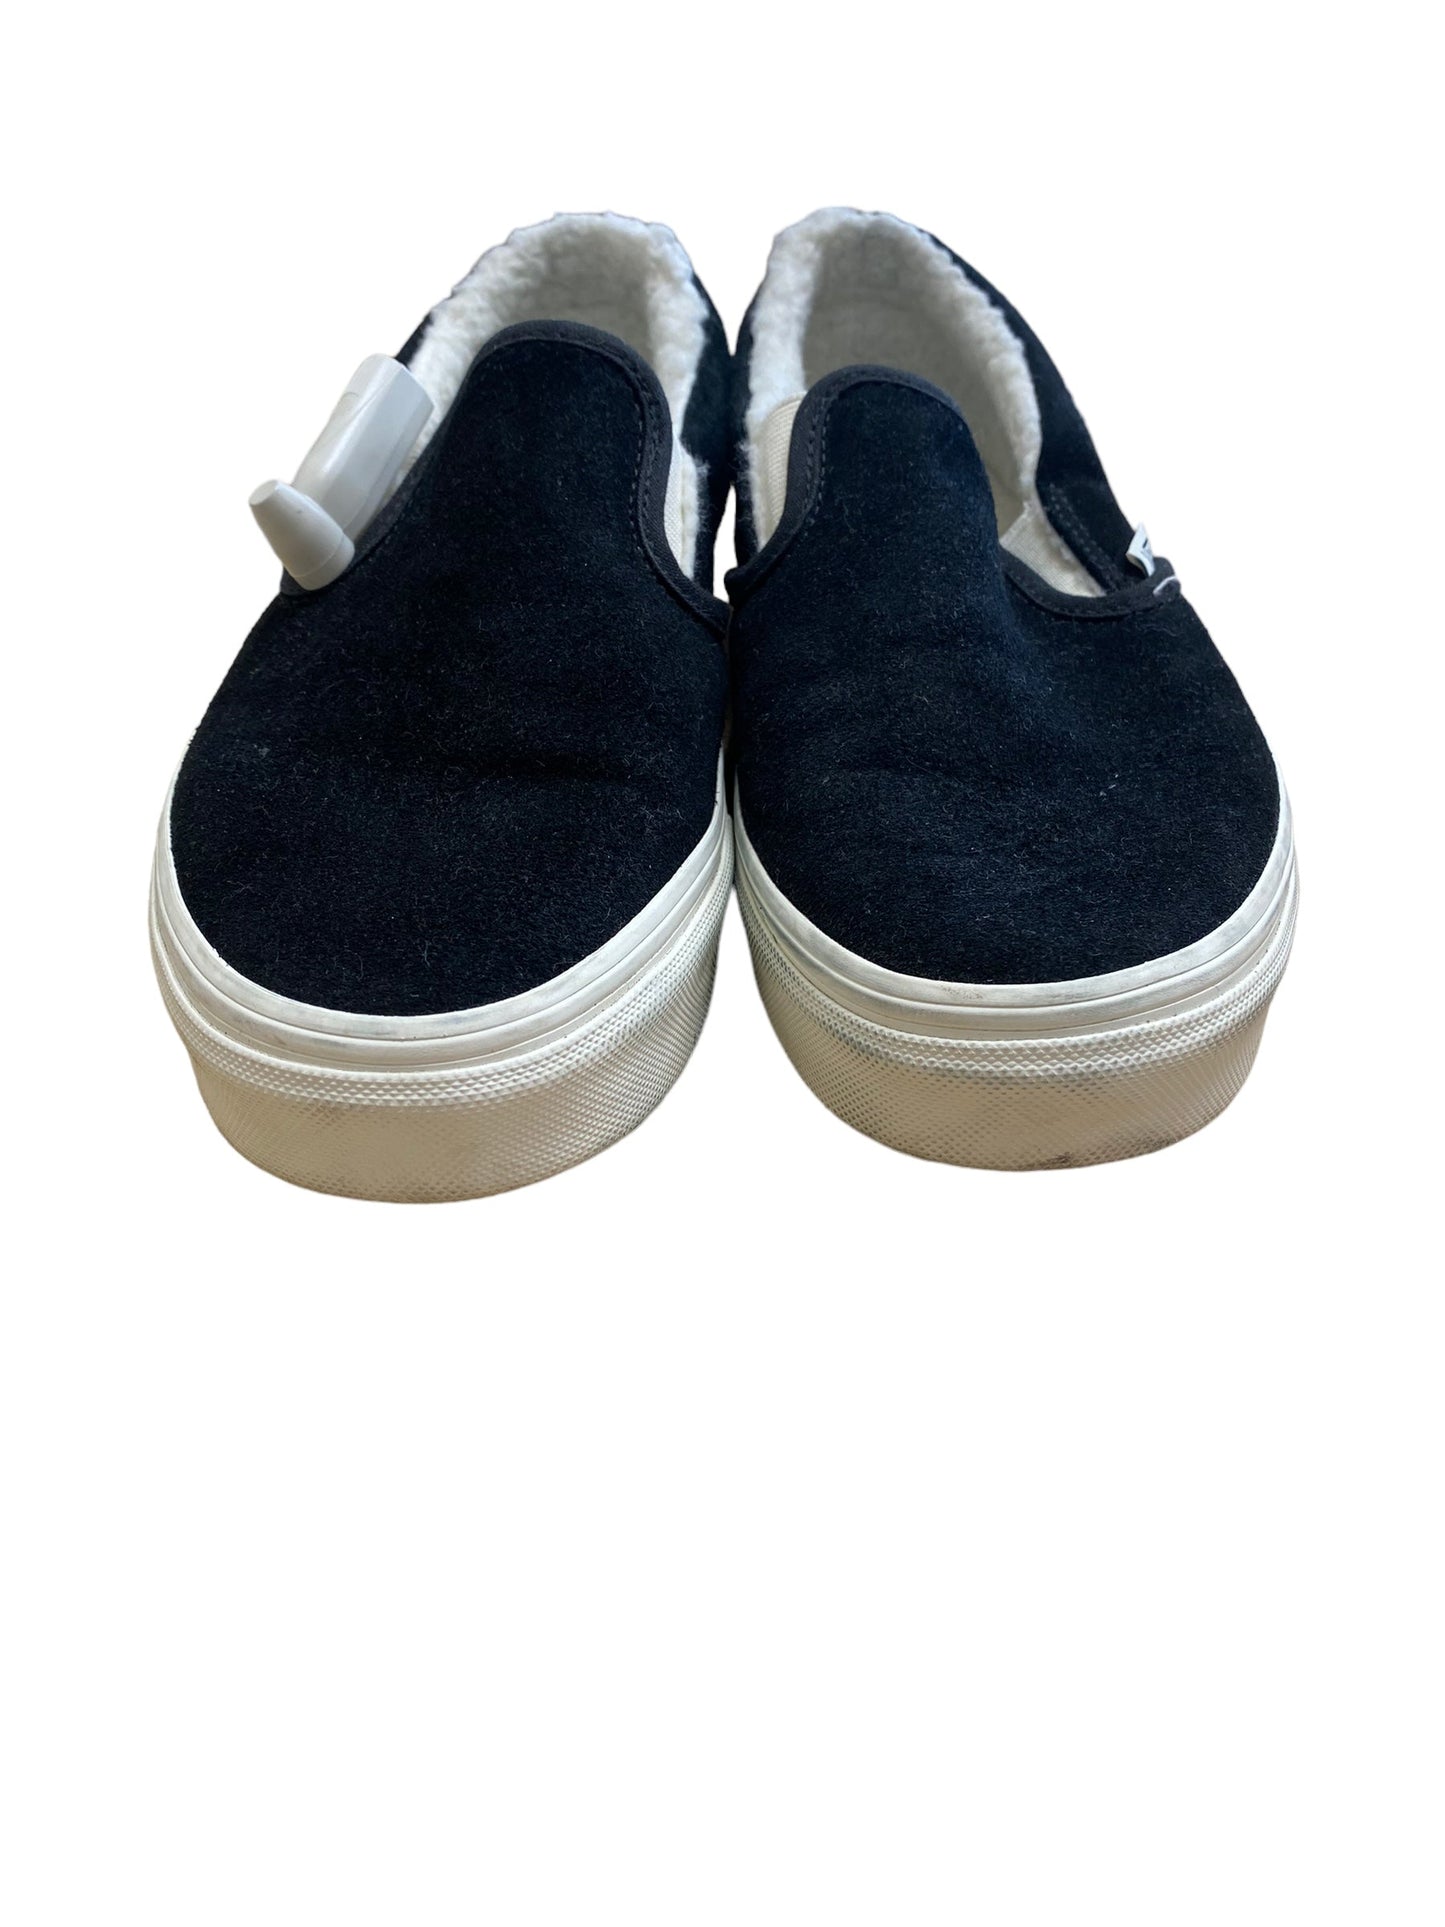 Shoes Flats By Vans  Size: 8.5